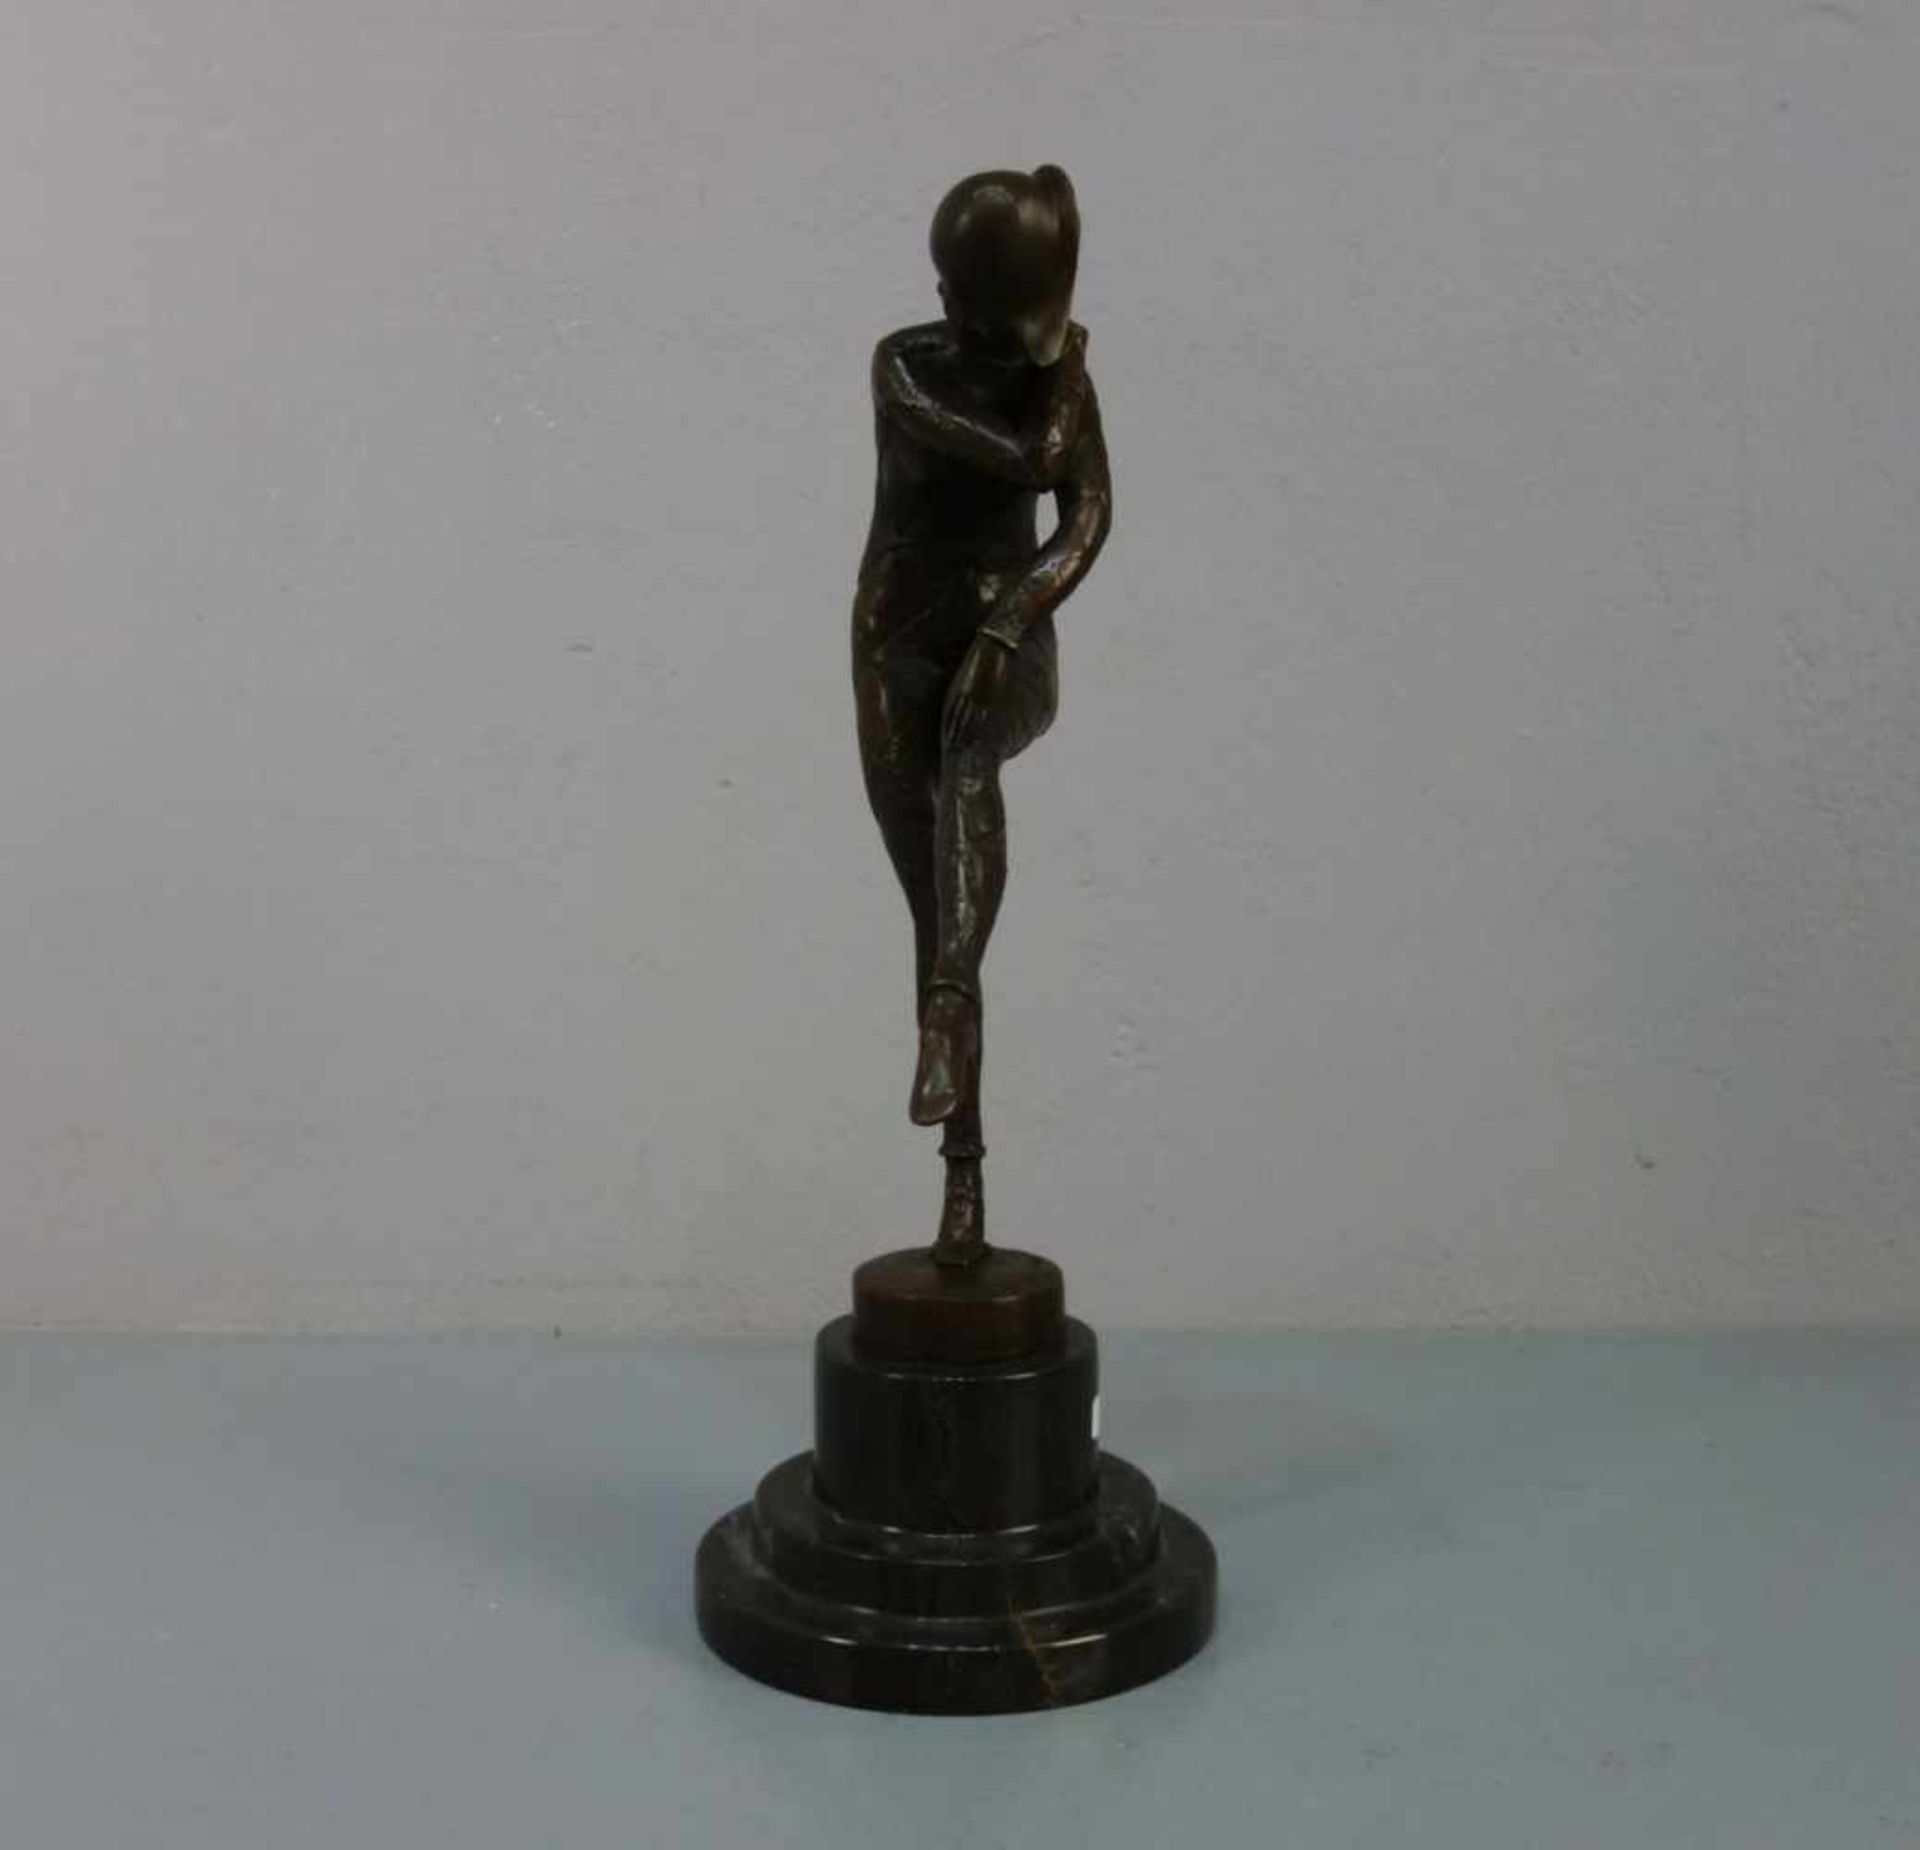 nach CHIPARUS, DÉMETRE HARALAMB (1886-1947), Skulptur / sculpture: "Weiblicher Harlekin", 20. Jh., - Image 2 of 4